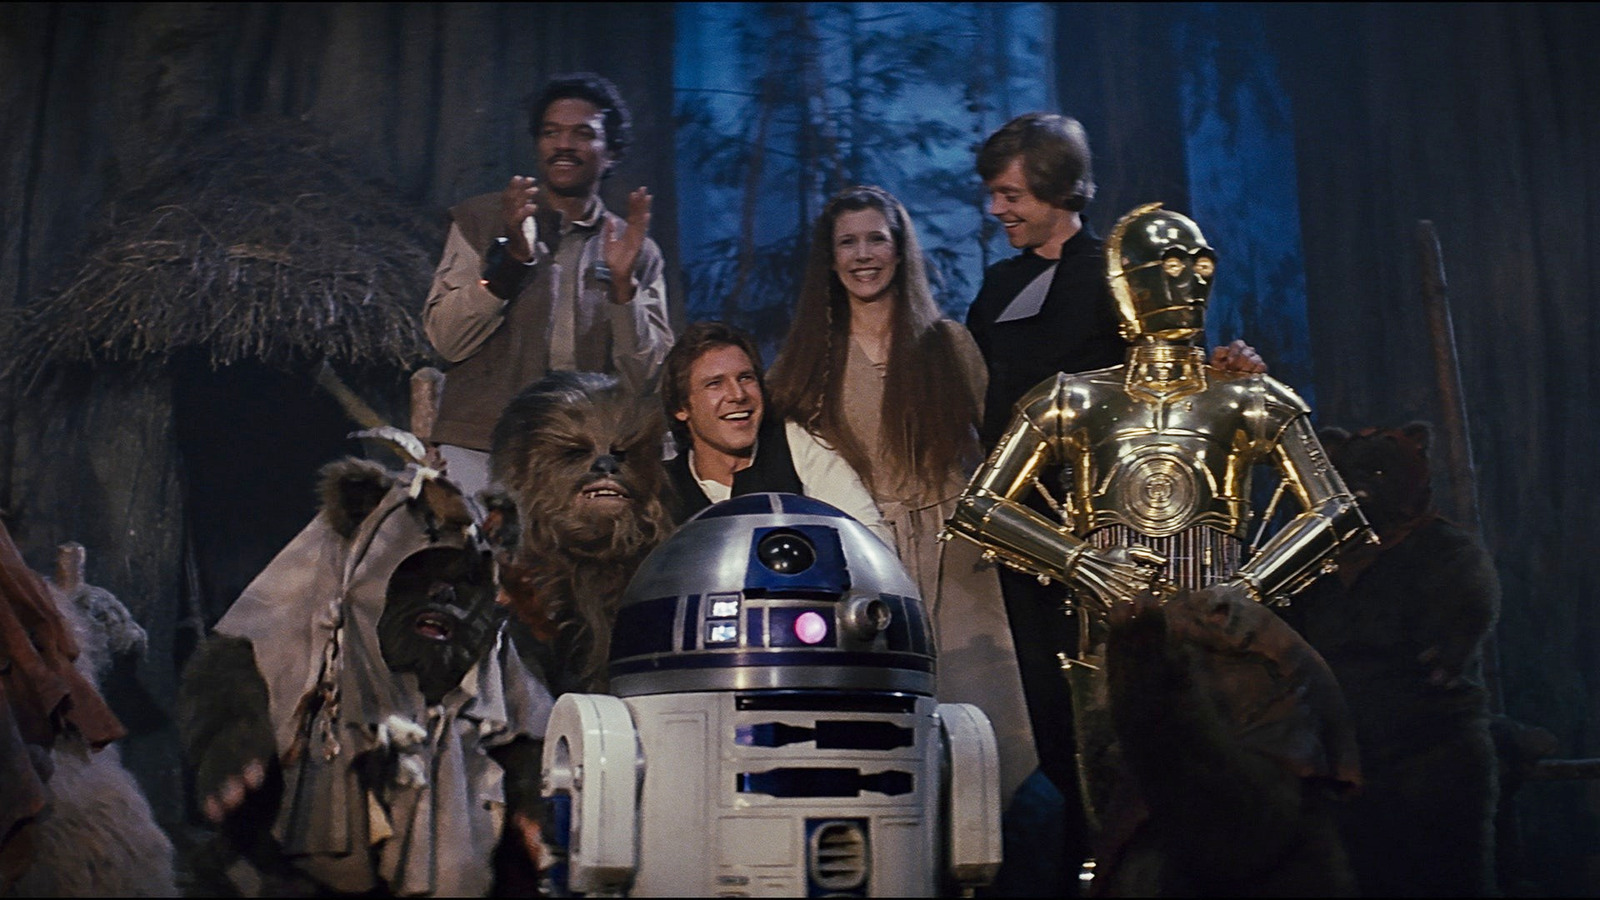 Una captura de pantalla del final de El retorno del Jedi, que muestra a los héroes de Endor.